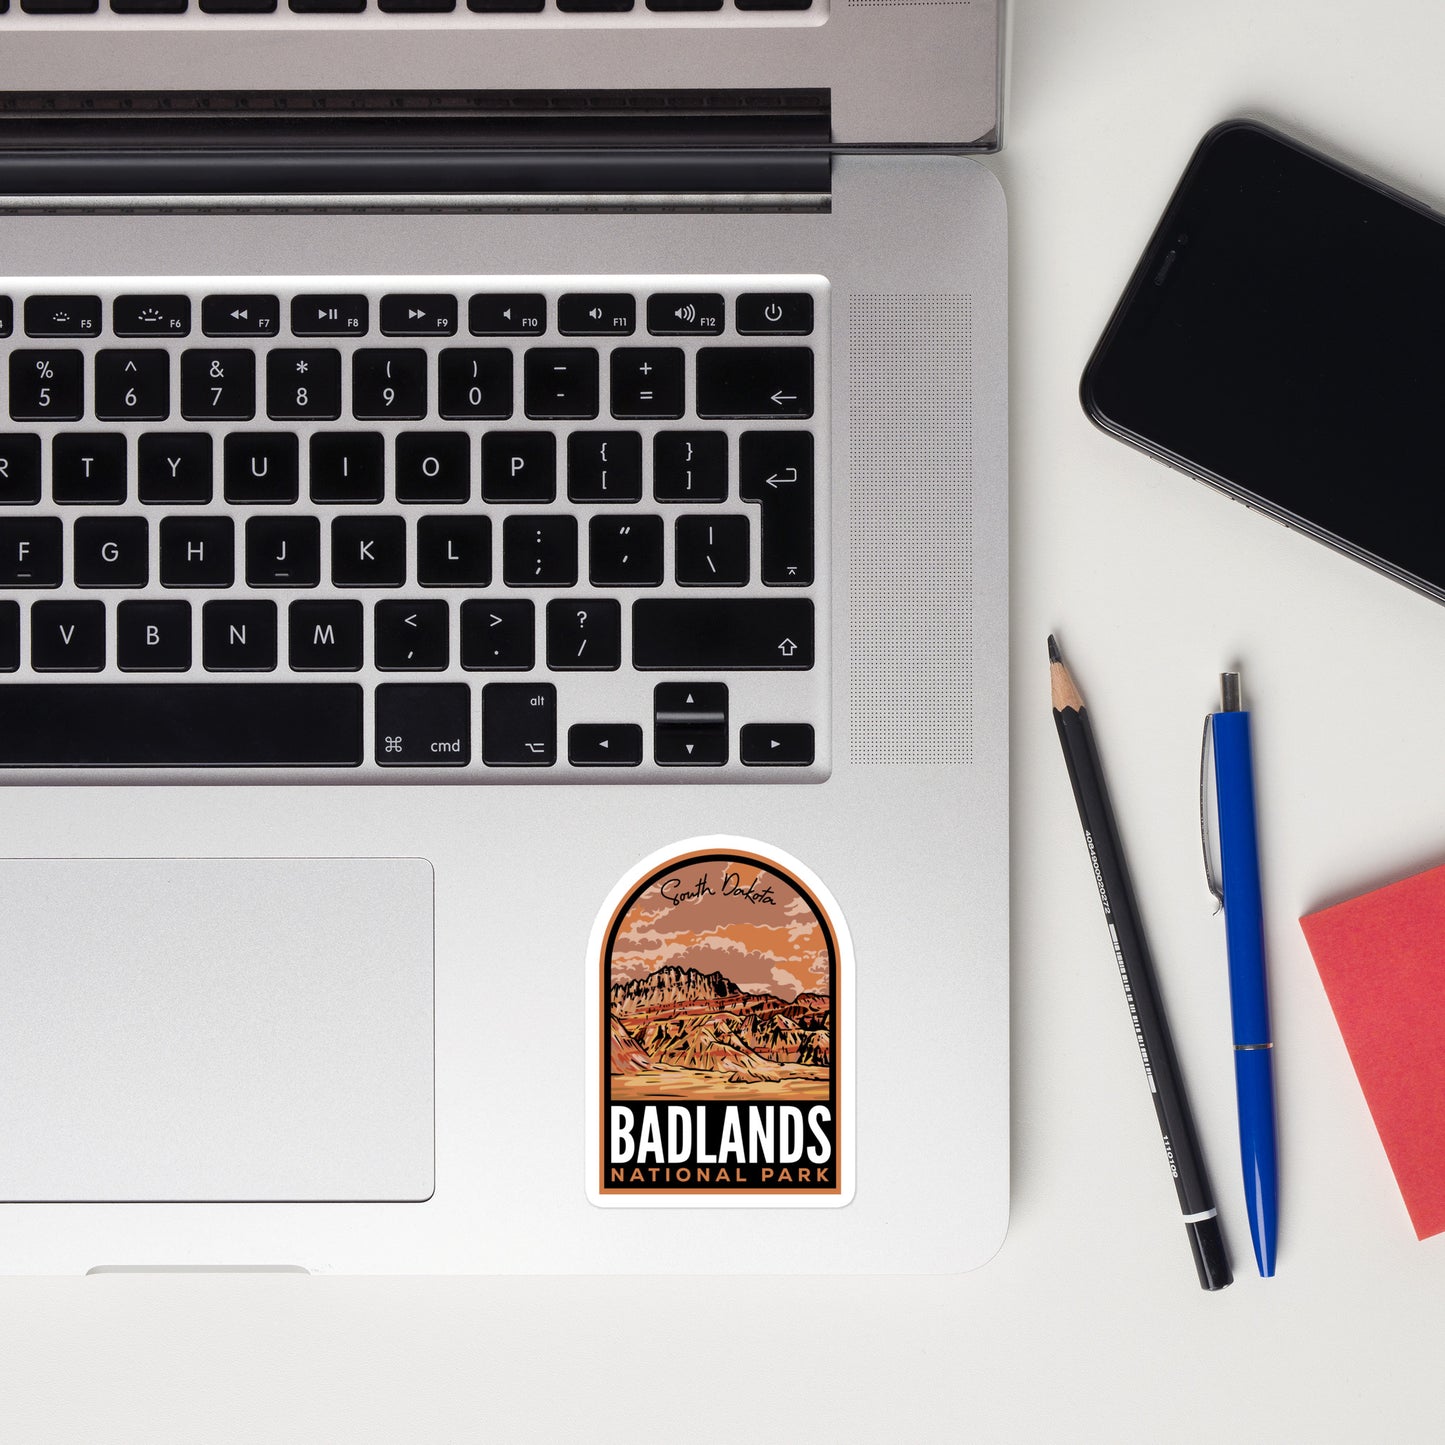 A 3 inch sticker of Badlands National Park on a laptop